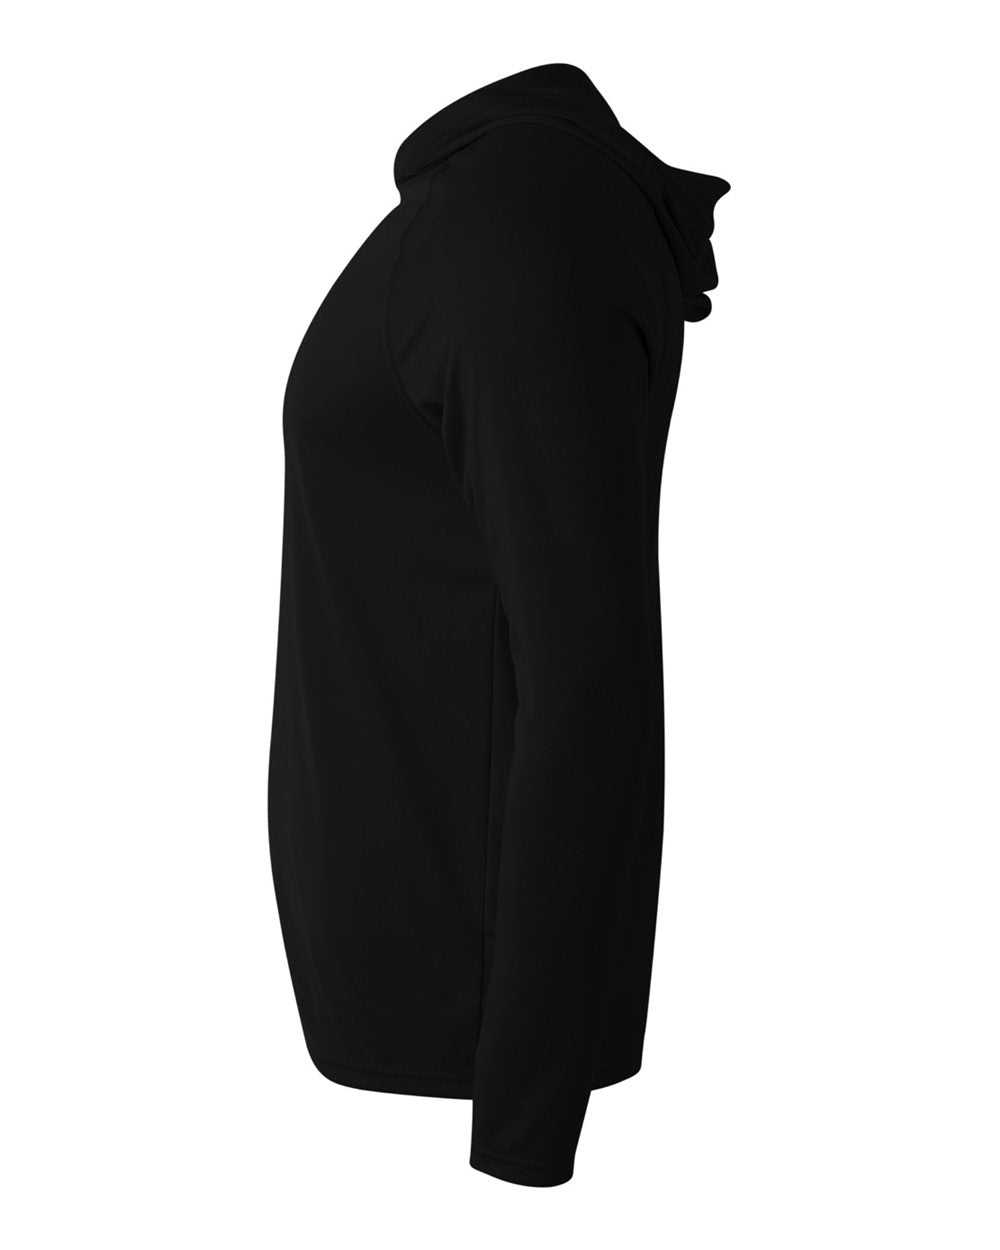 A4 N3409 Long Sleeve Hooded Tee - Black - HIT a Double